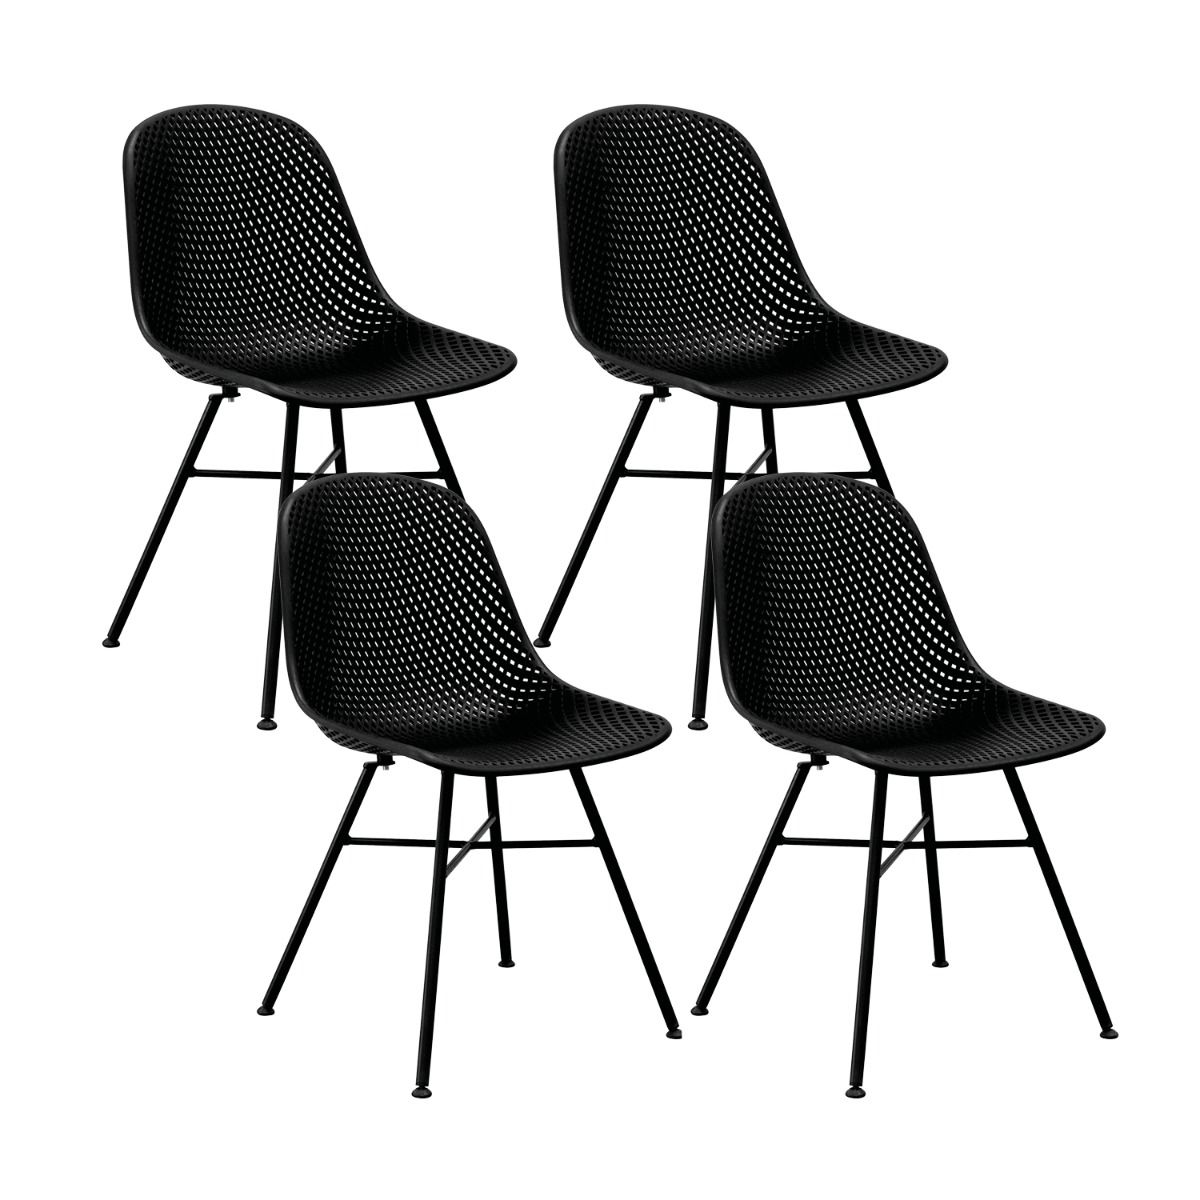 Set of 4 Garden Chair - Black Kick Collection